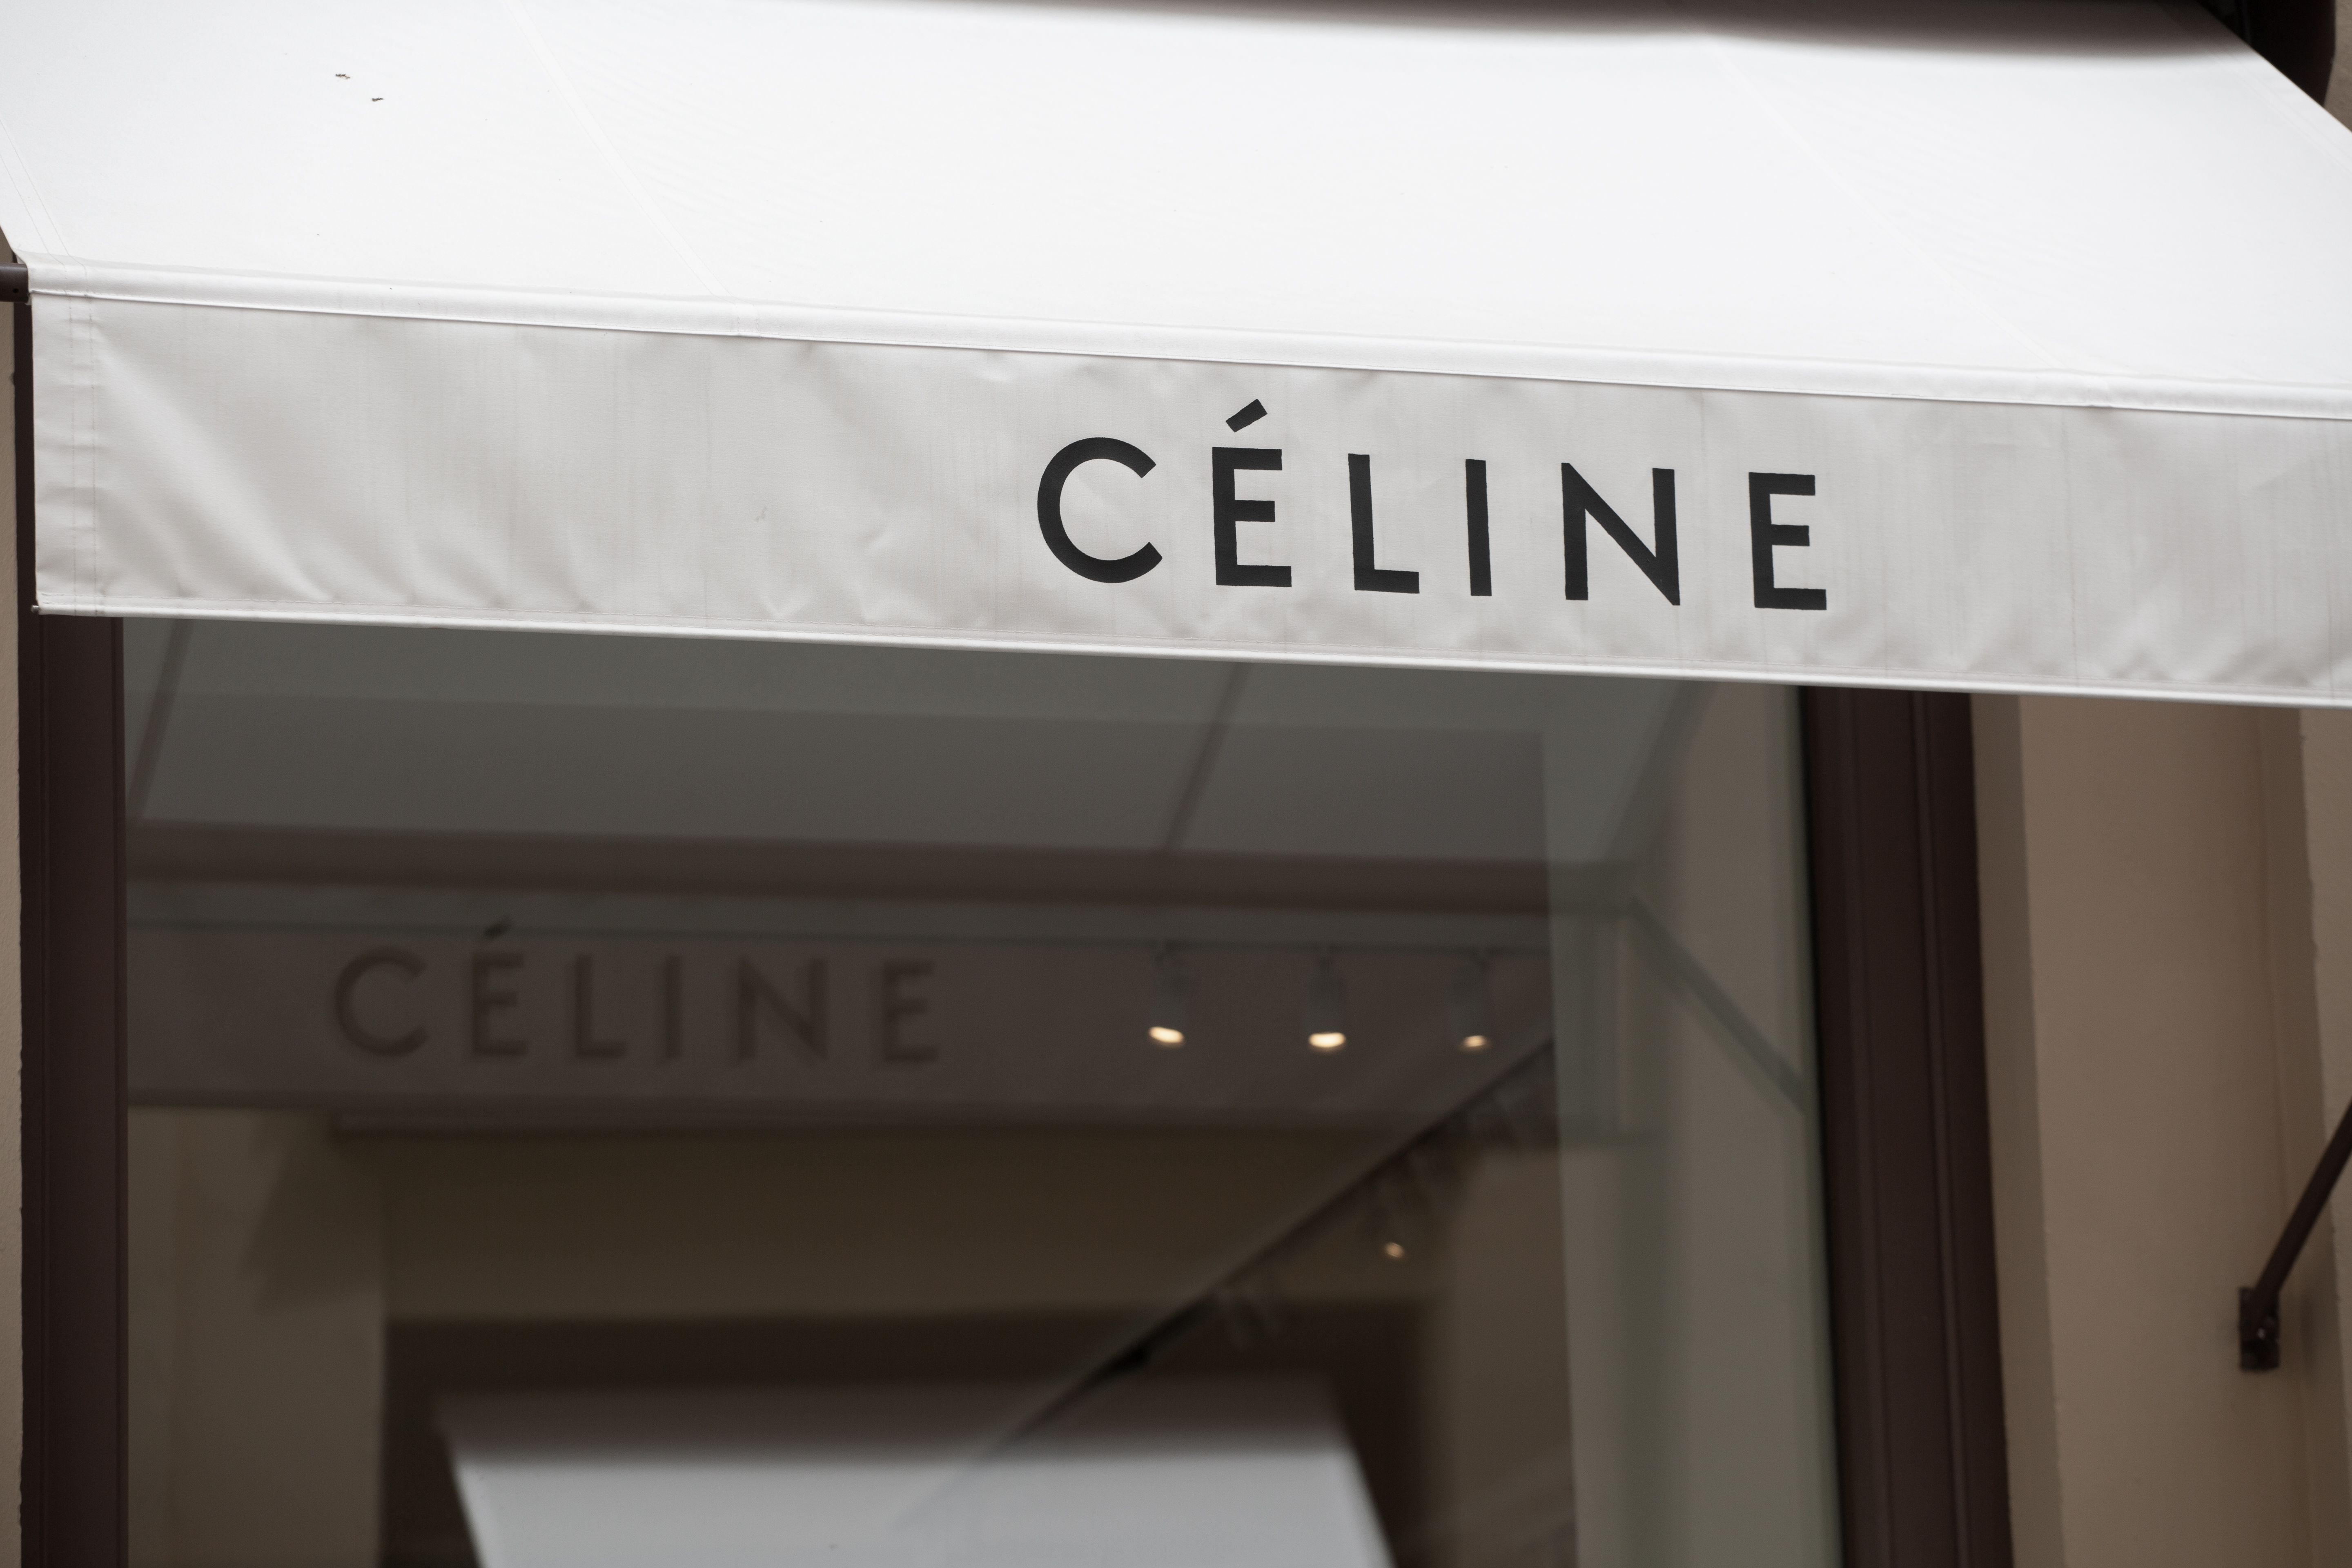 Celine Debuts New Logo Inspired by Original 1960s Version